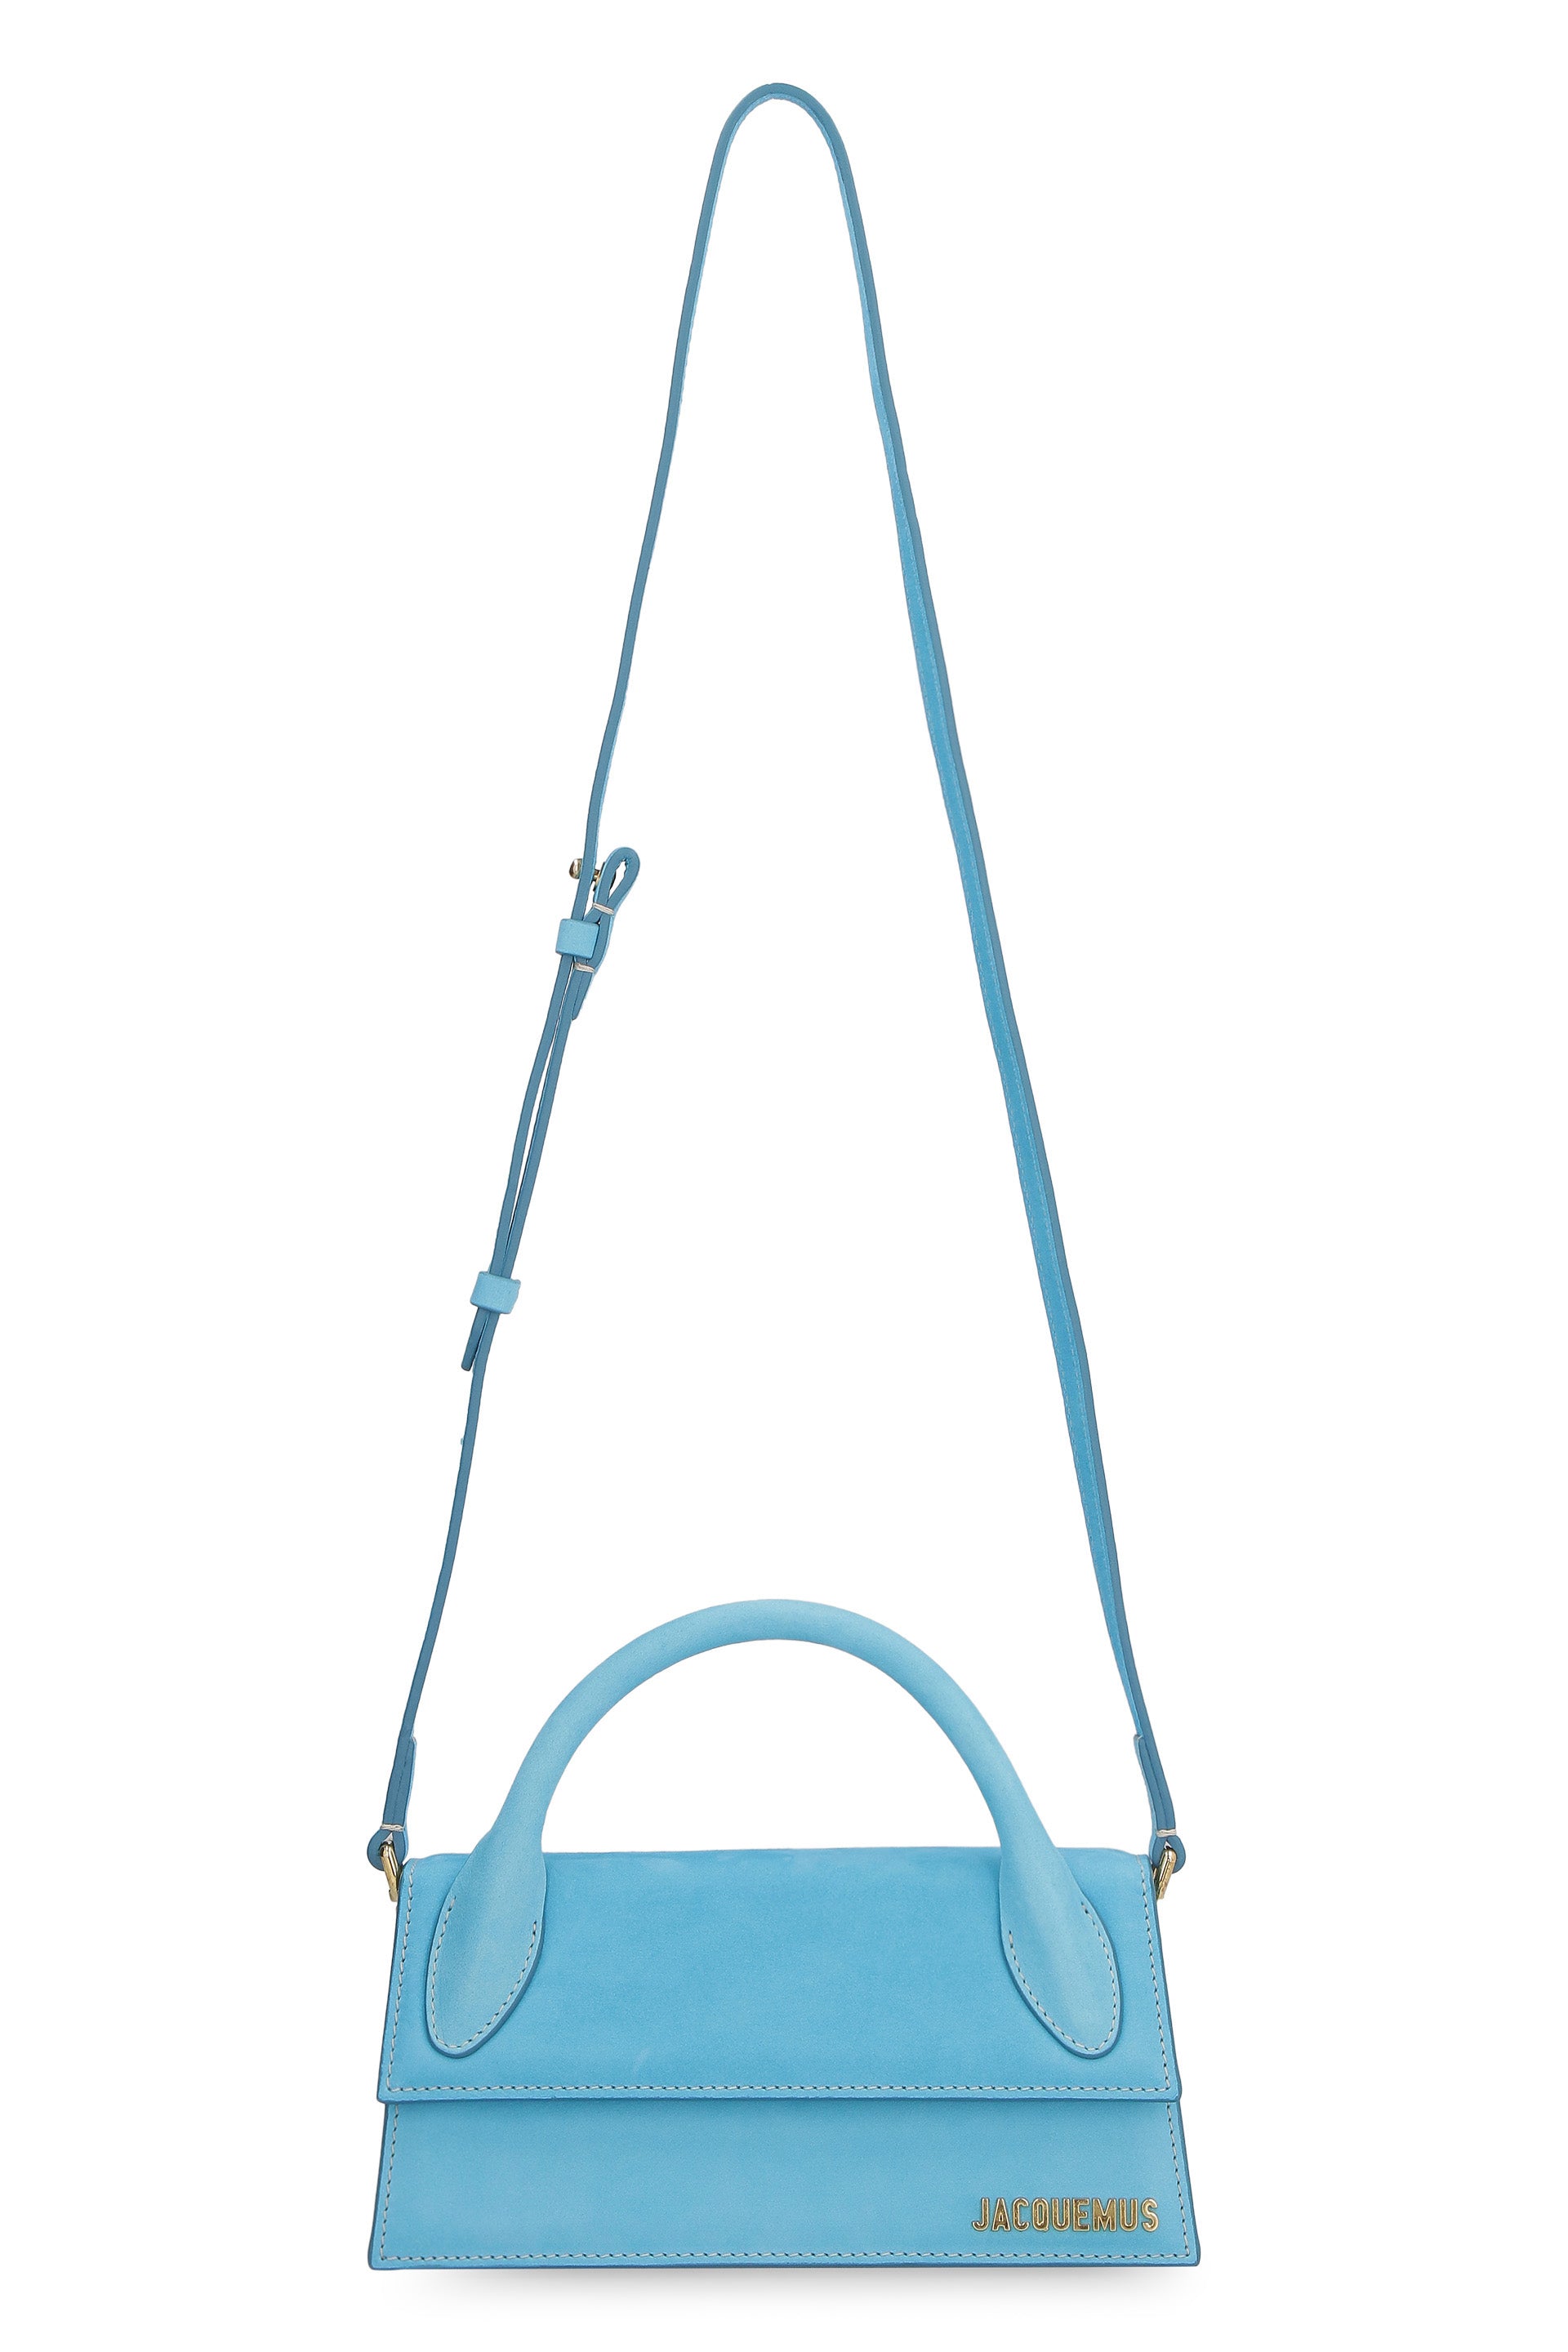 Jacquemus - Le Chiquito Long handbag Blue - The Corner